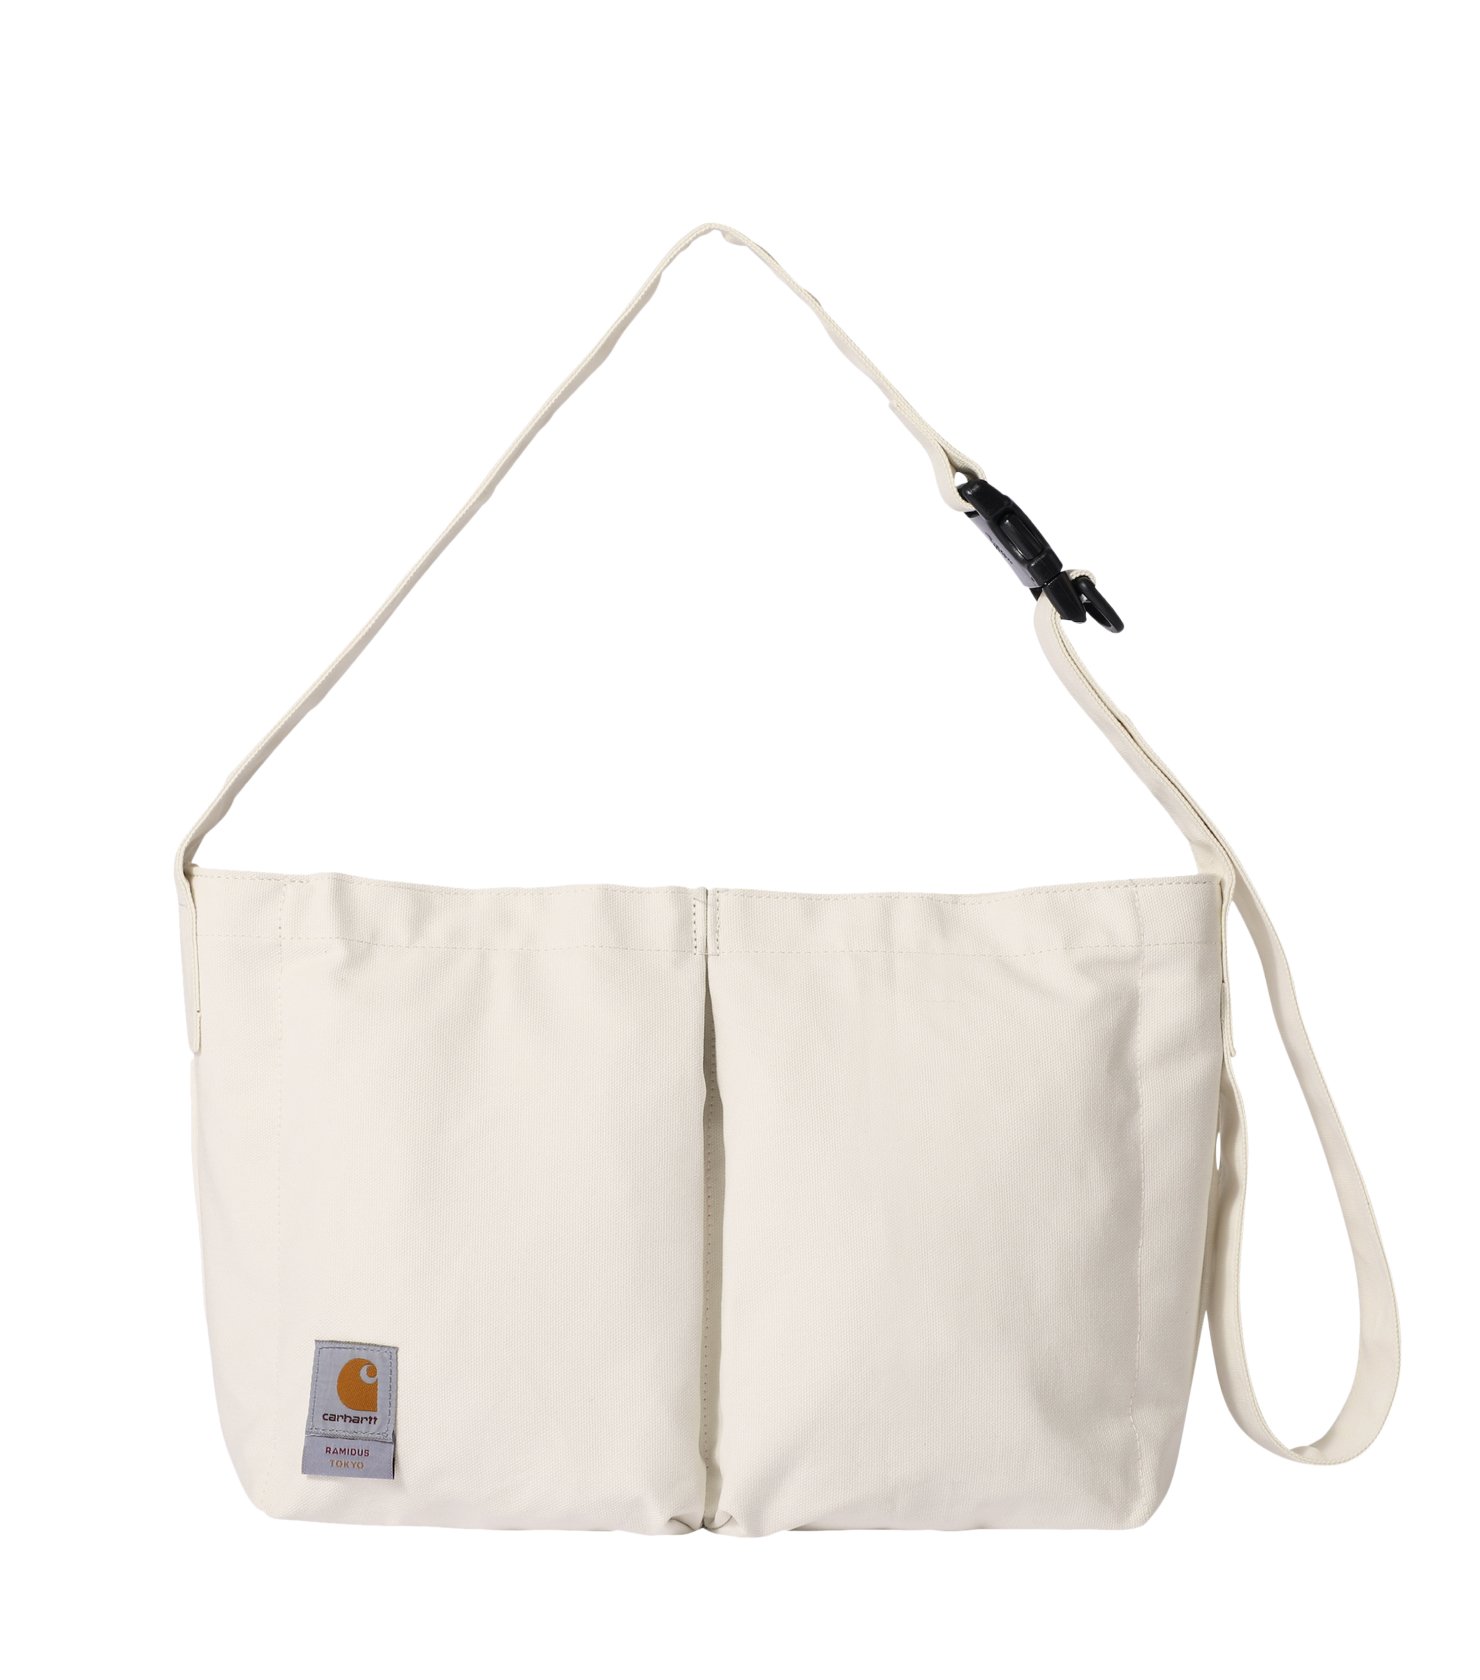 RAMIDUS x Carhartt WIP Unveil Bag Capsule